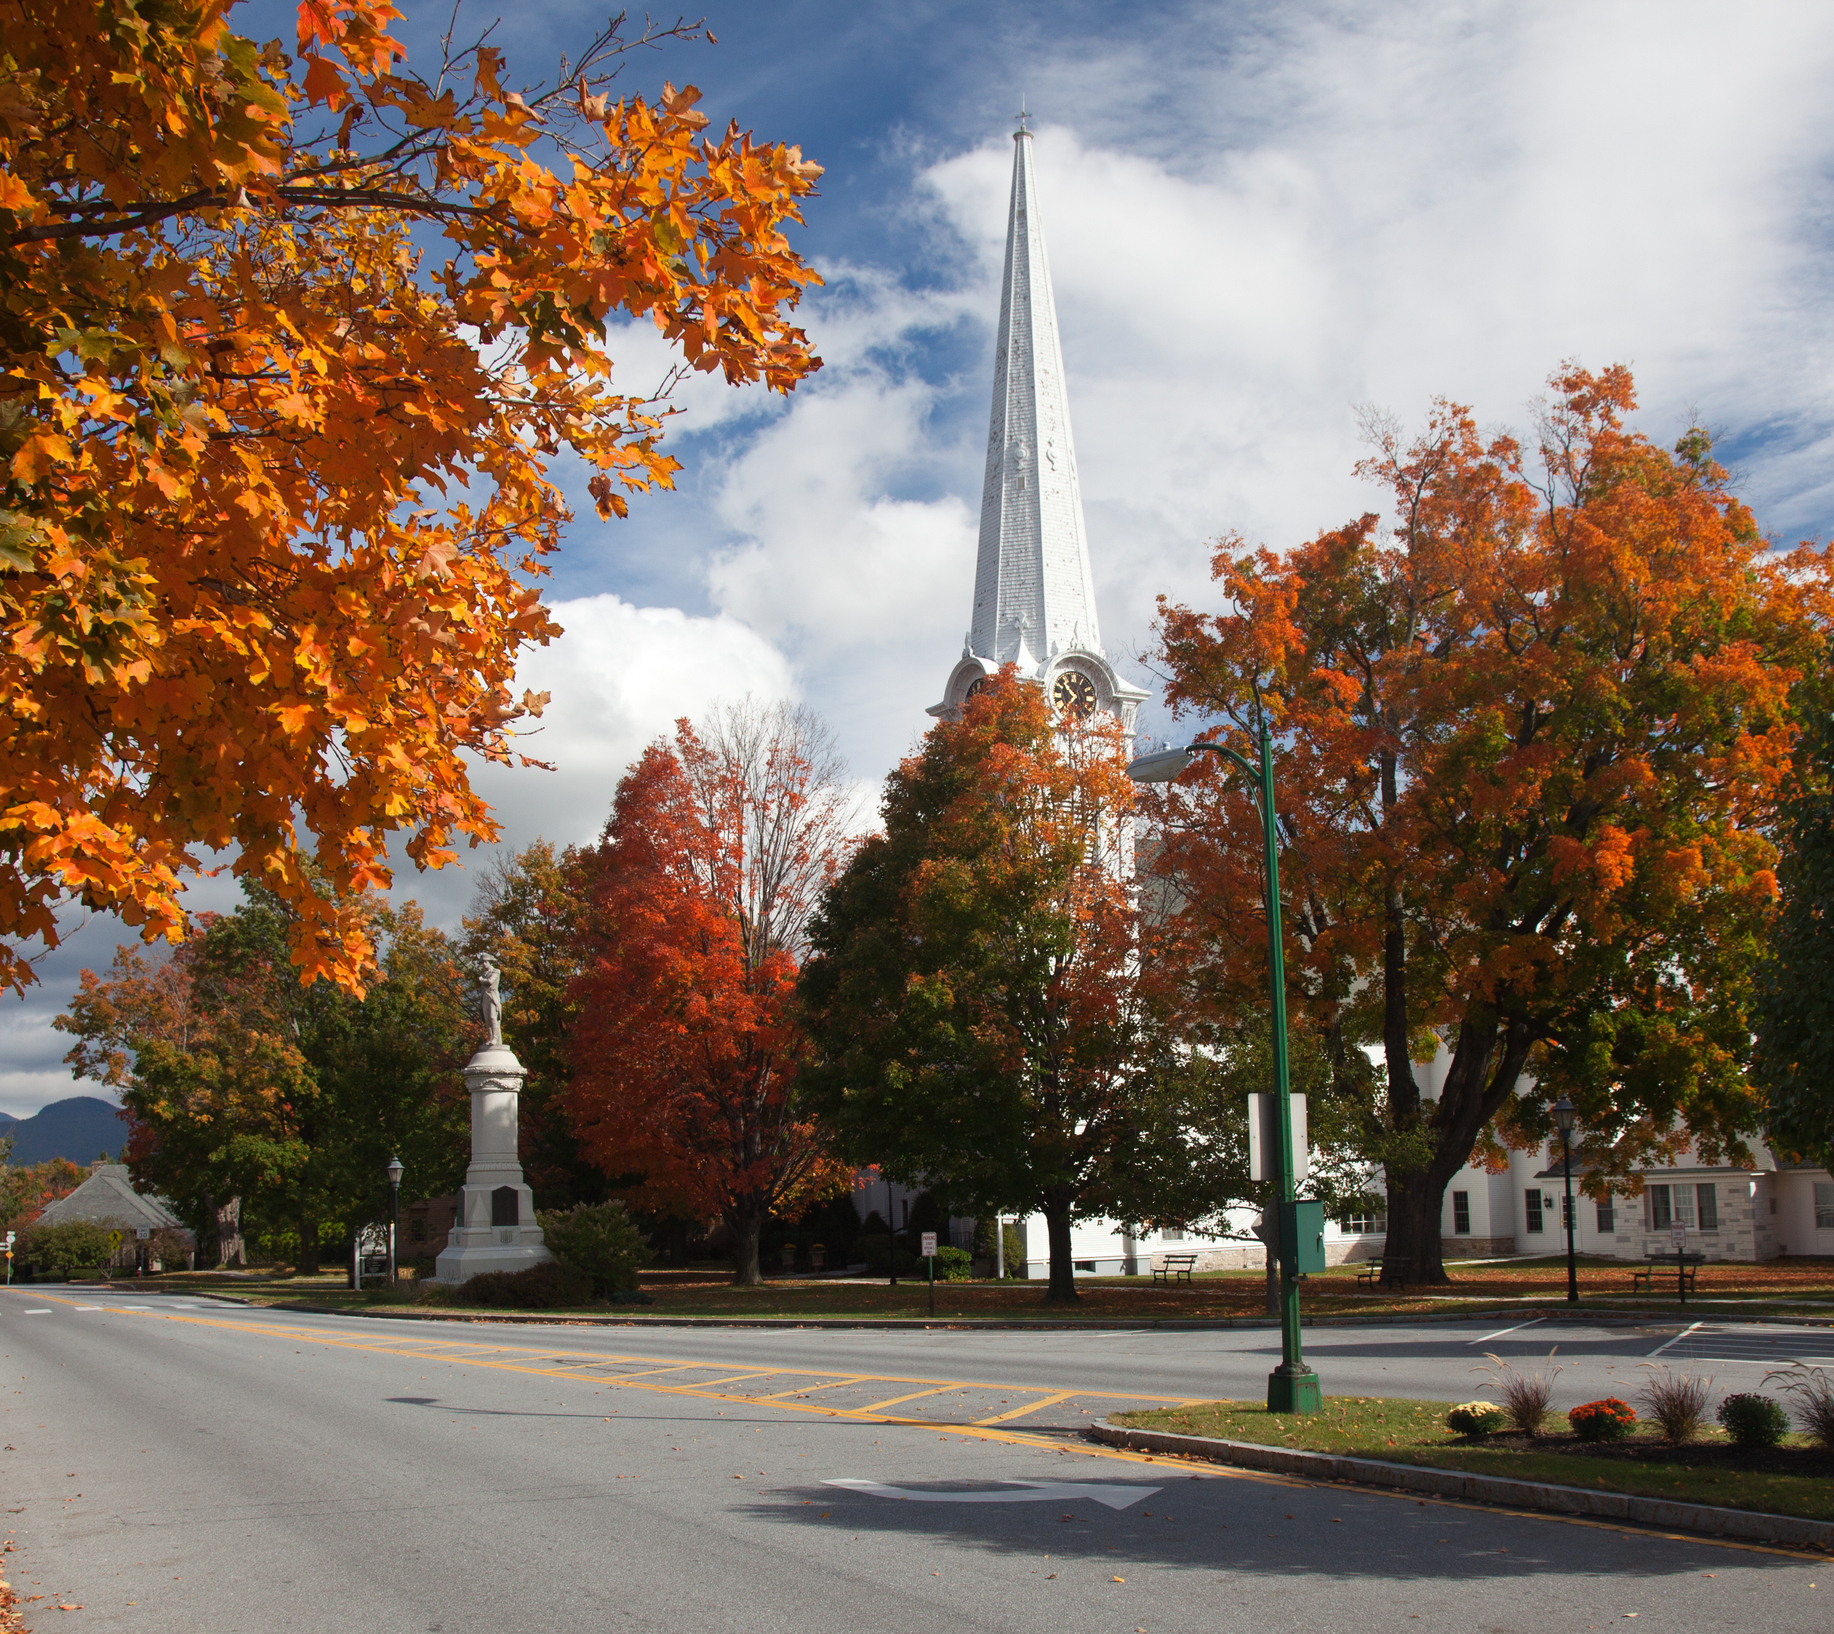 Church steeple rises behind autumn trees along a quiet street